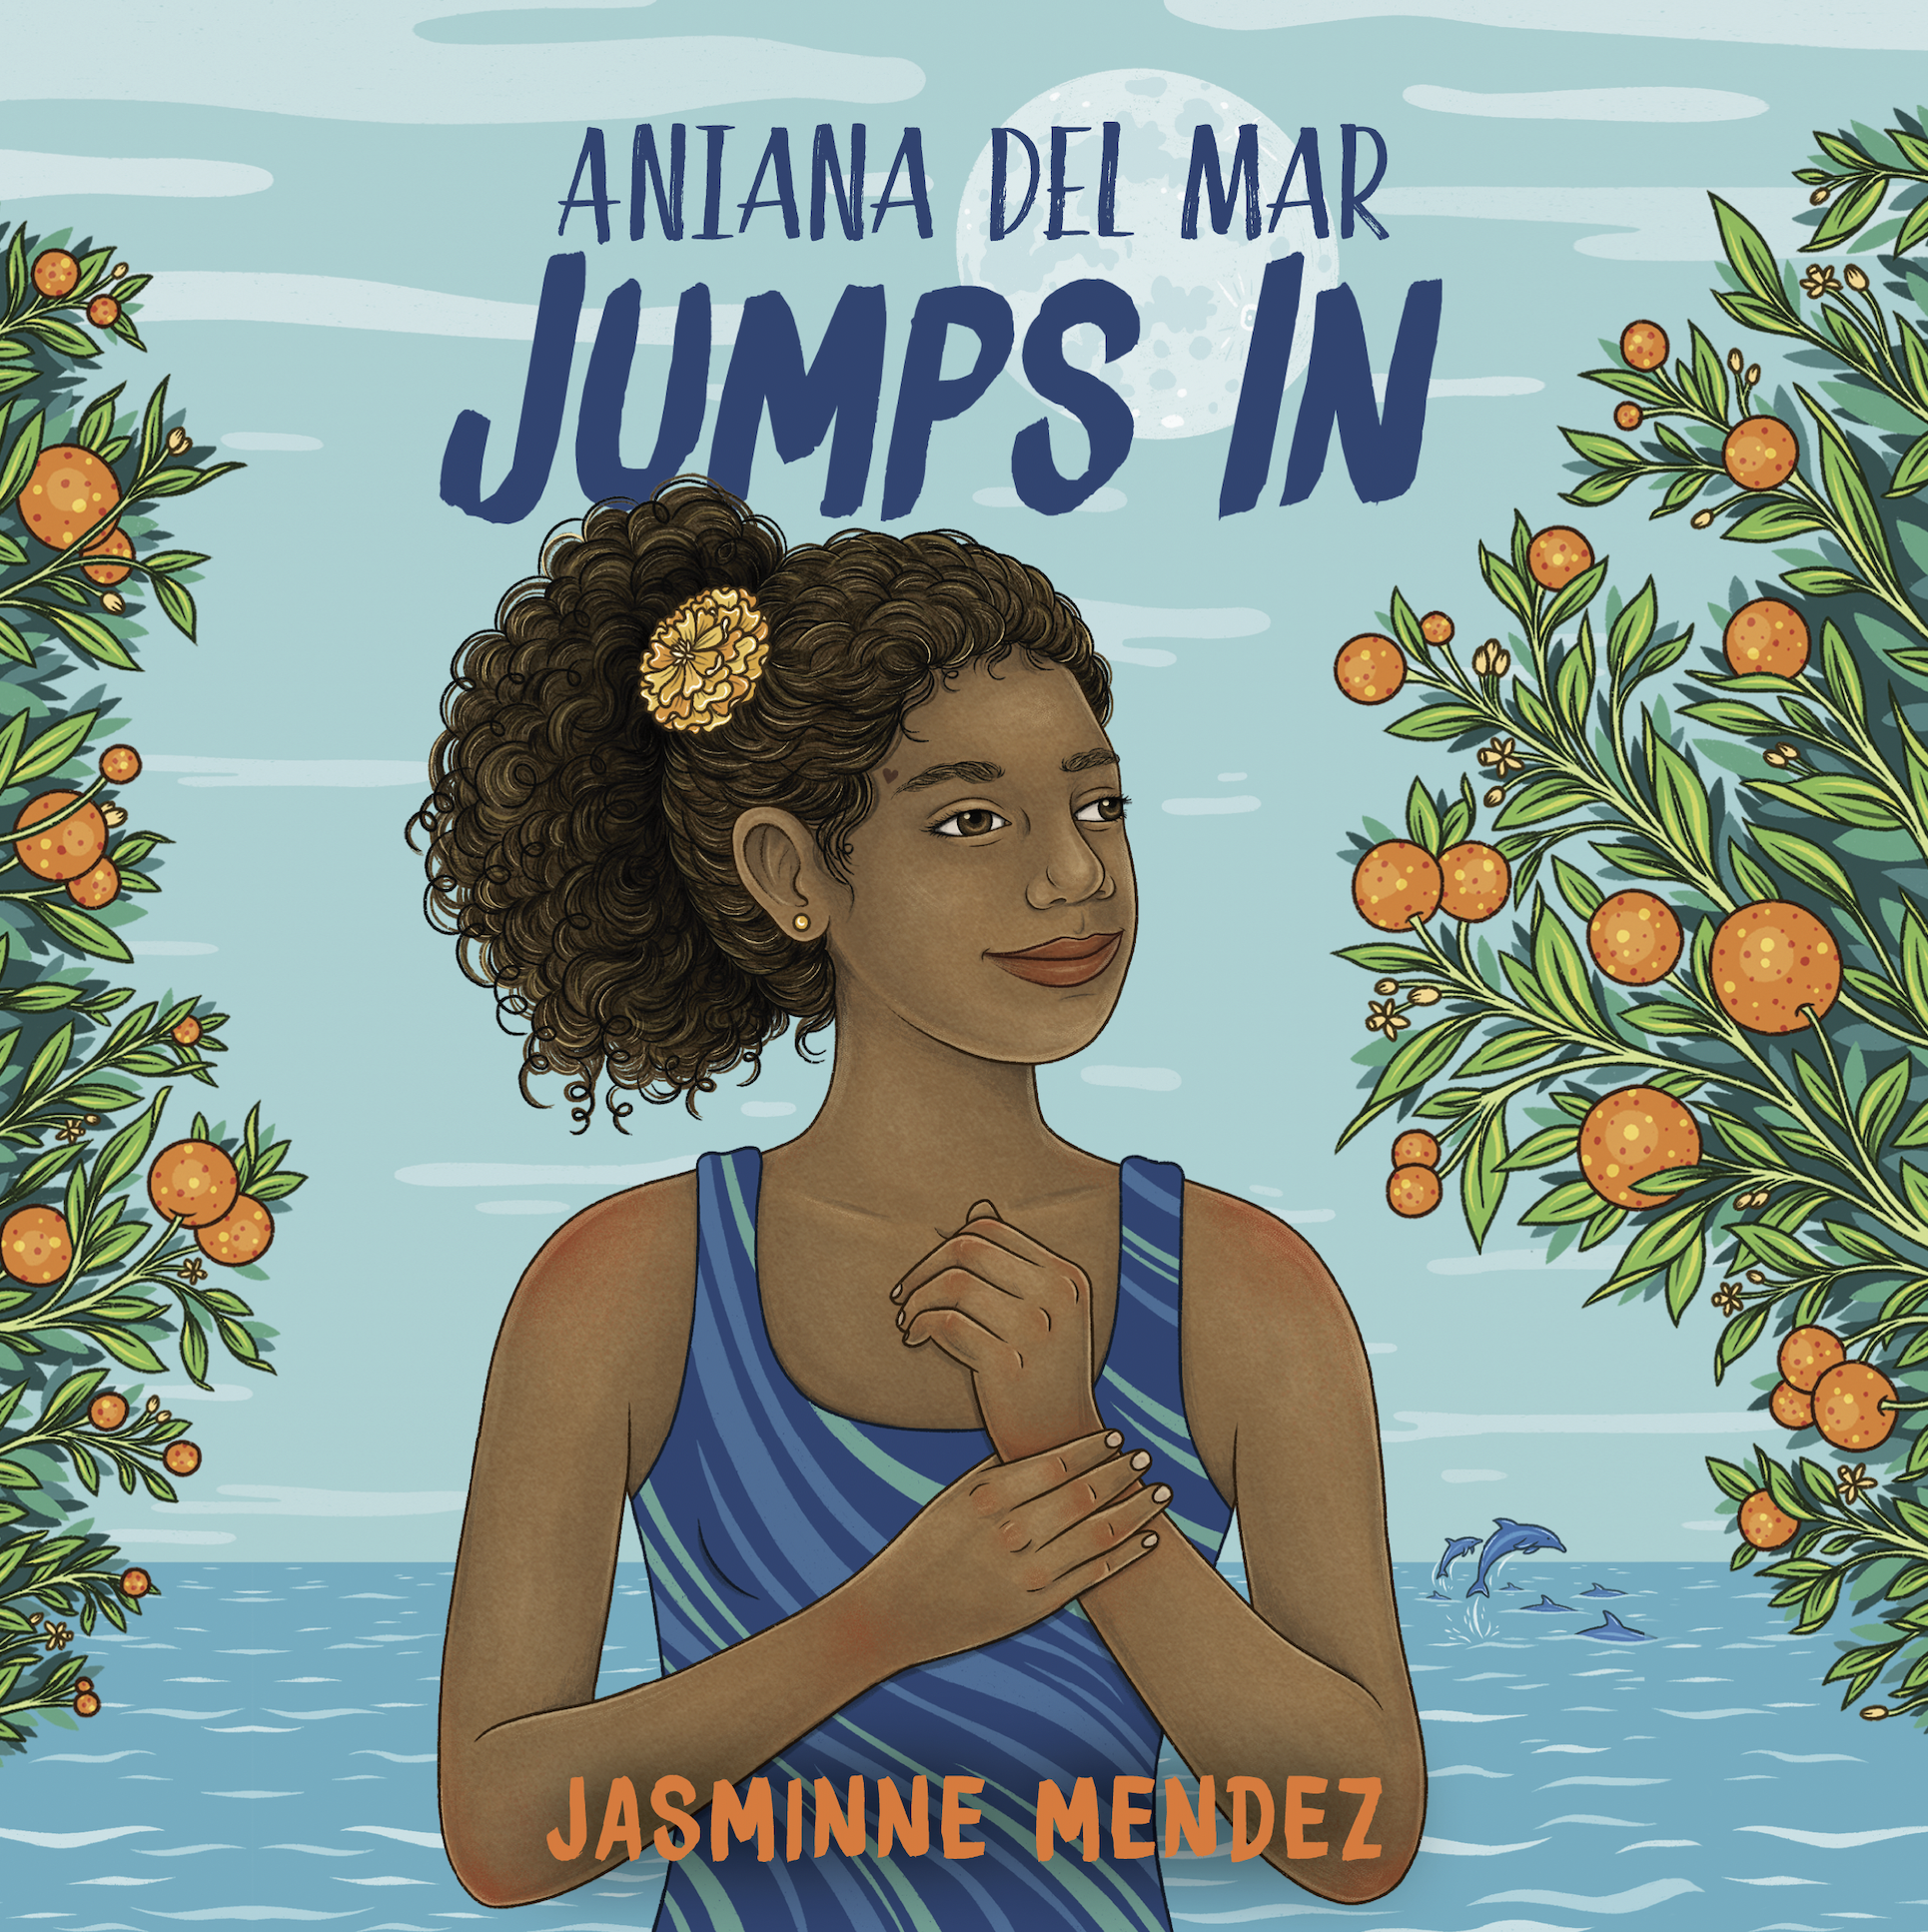 Jasmine-Mendez-Aniana-del-Mar-Audiobook-directed-by-Rene-Veron.png